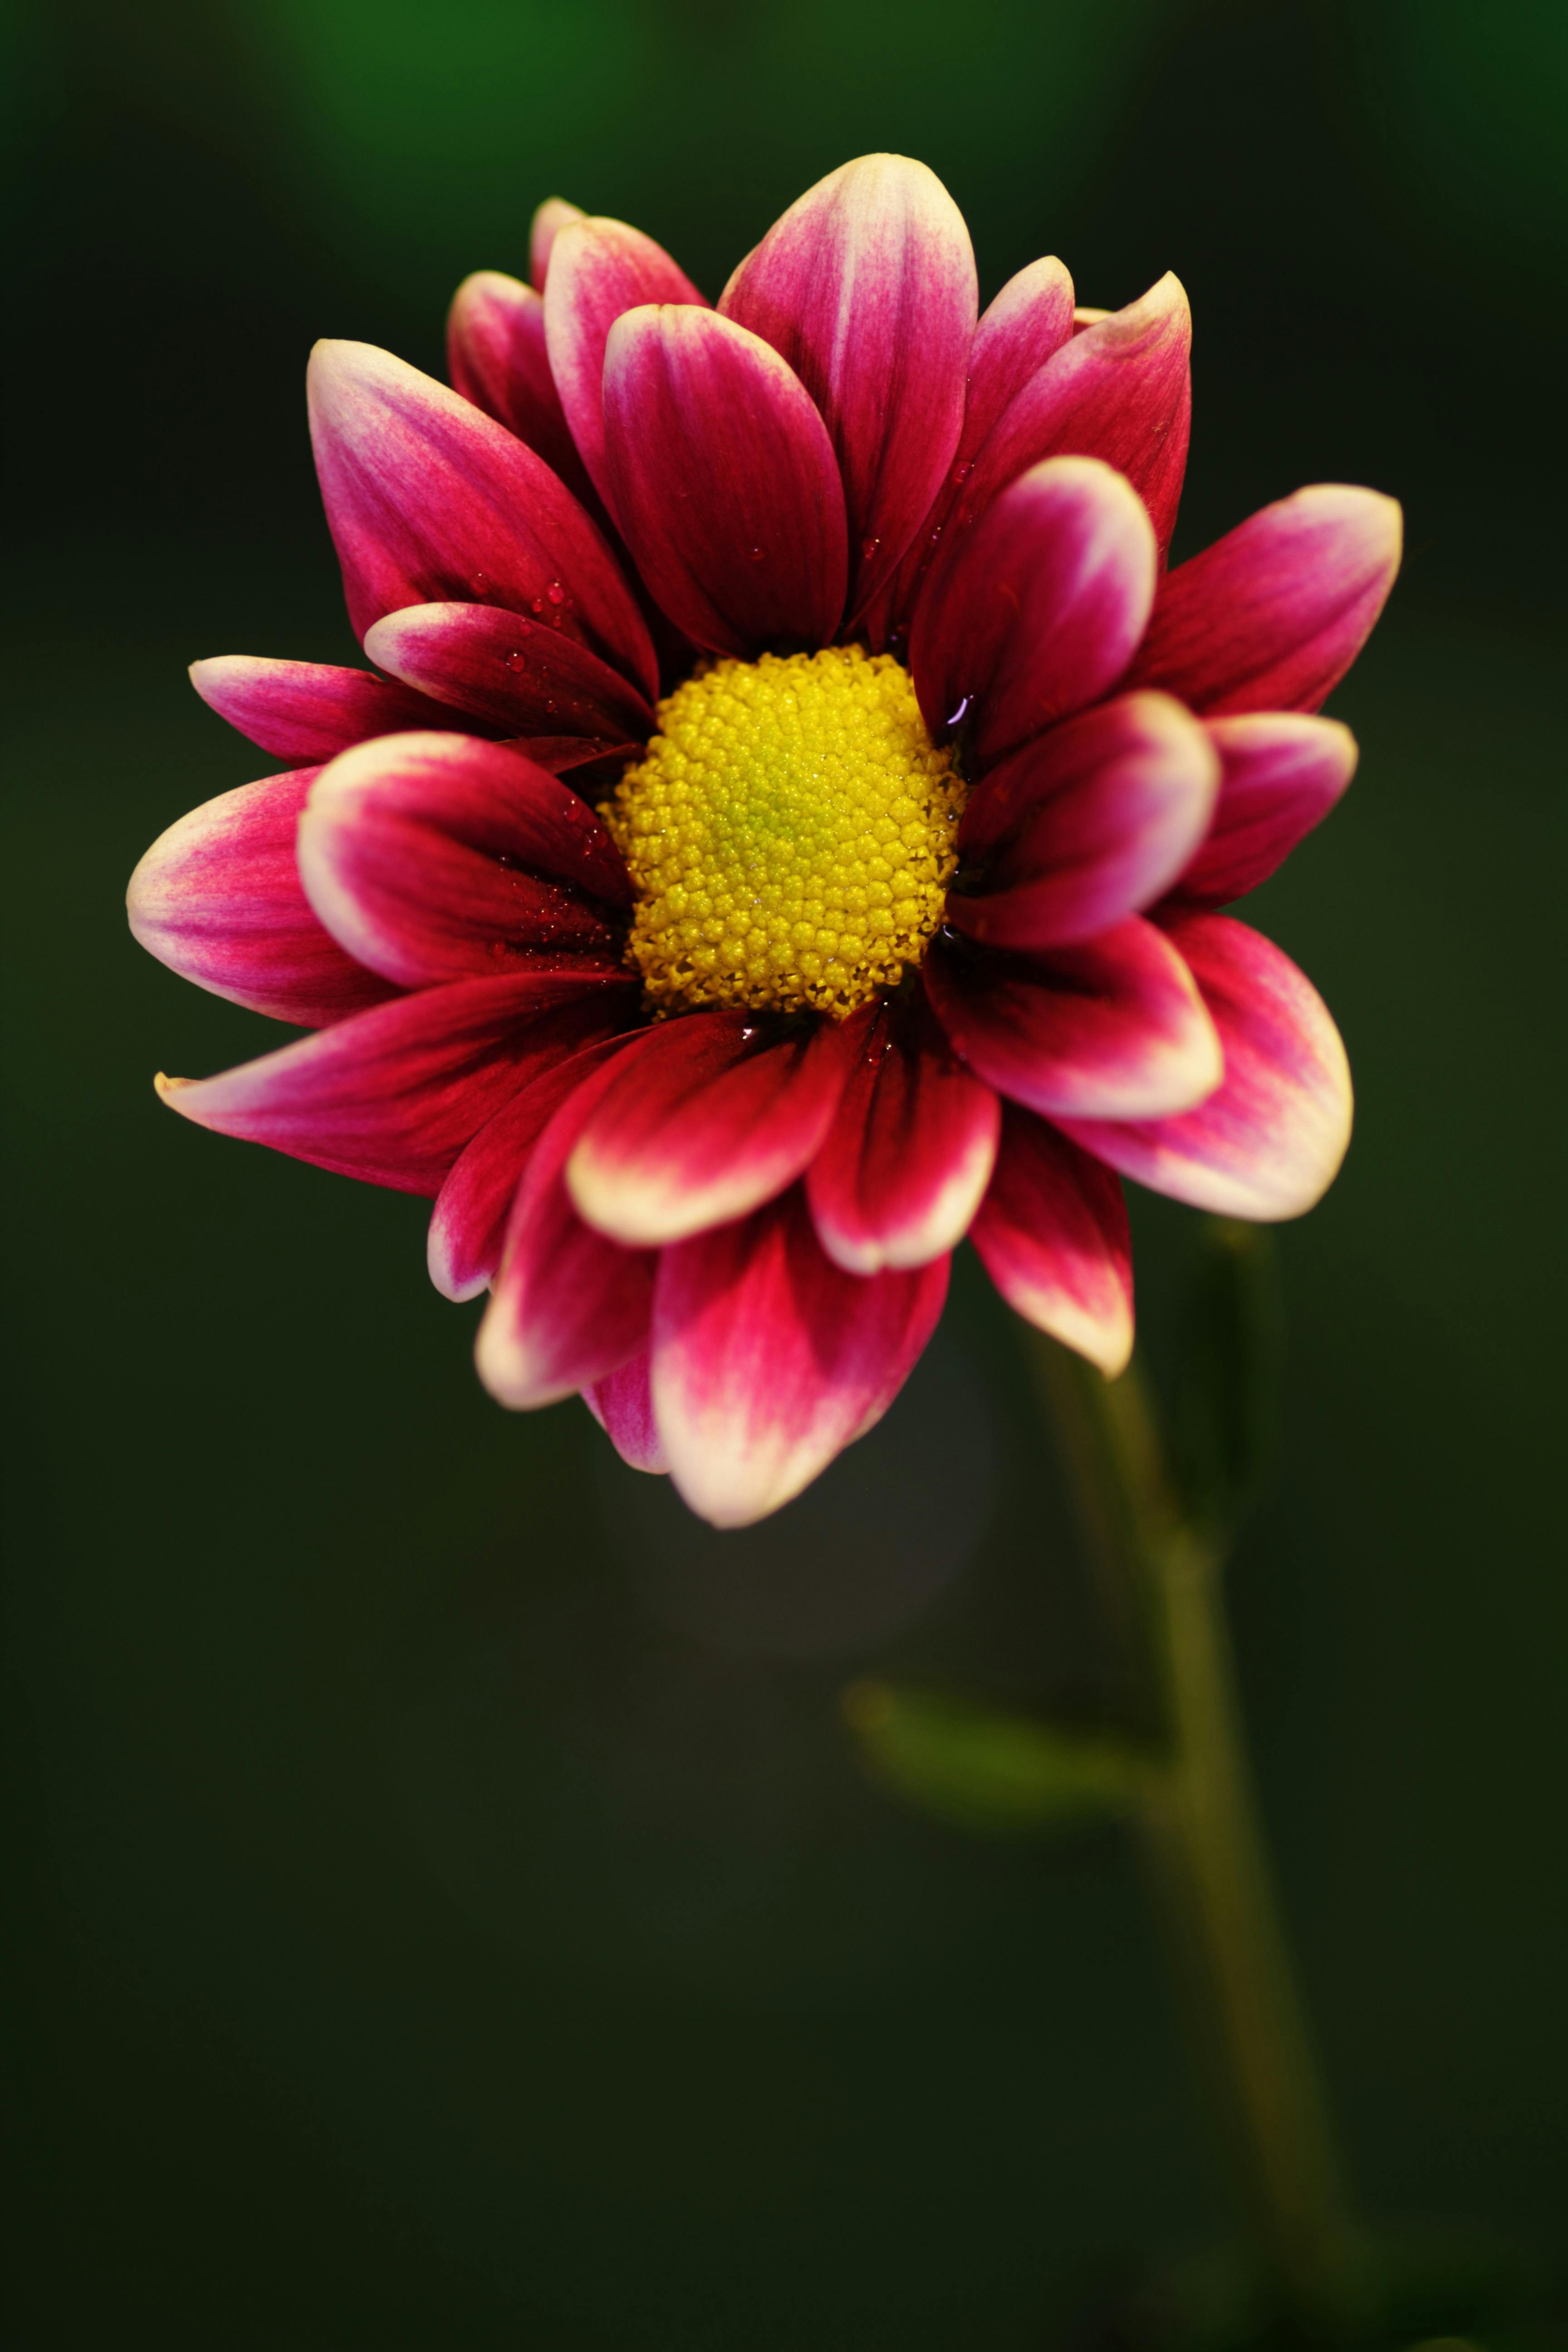 125,835 Single Flower Wallpaper Images, Stock Photos & Vectors |  Shutterstock